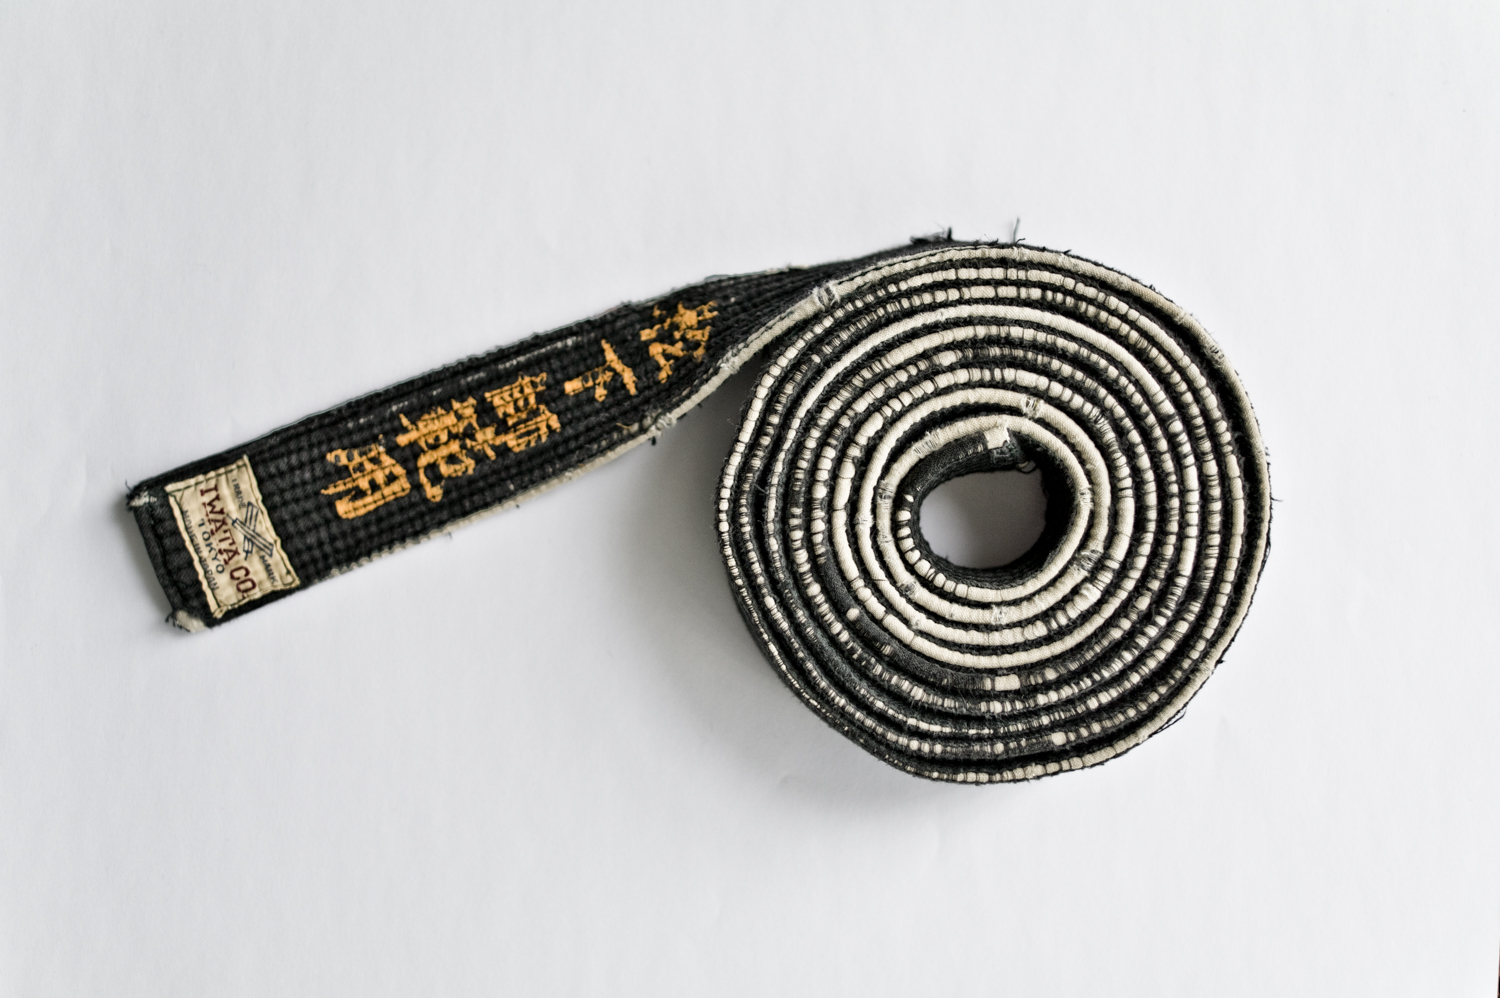  Akinori Hosaka's belt, and name in Japanese.  When he came to England he was a true contest 5th Dan Judoka. 